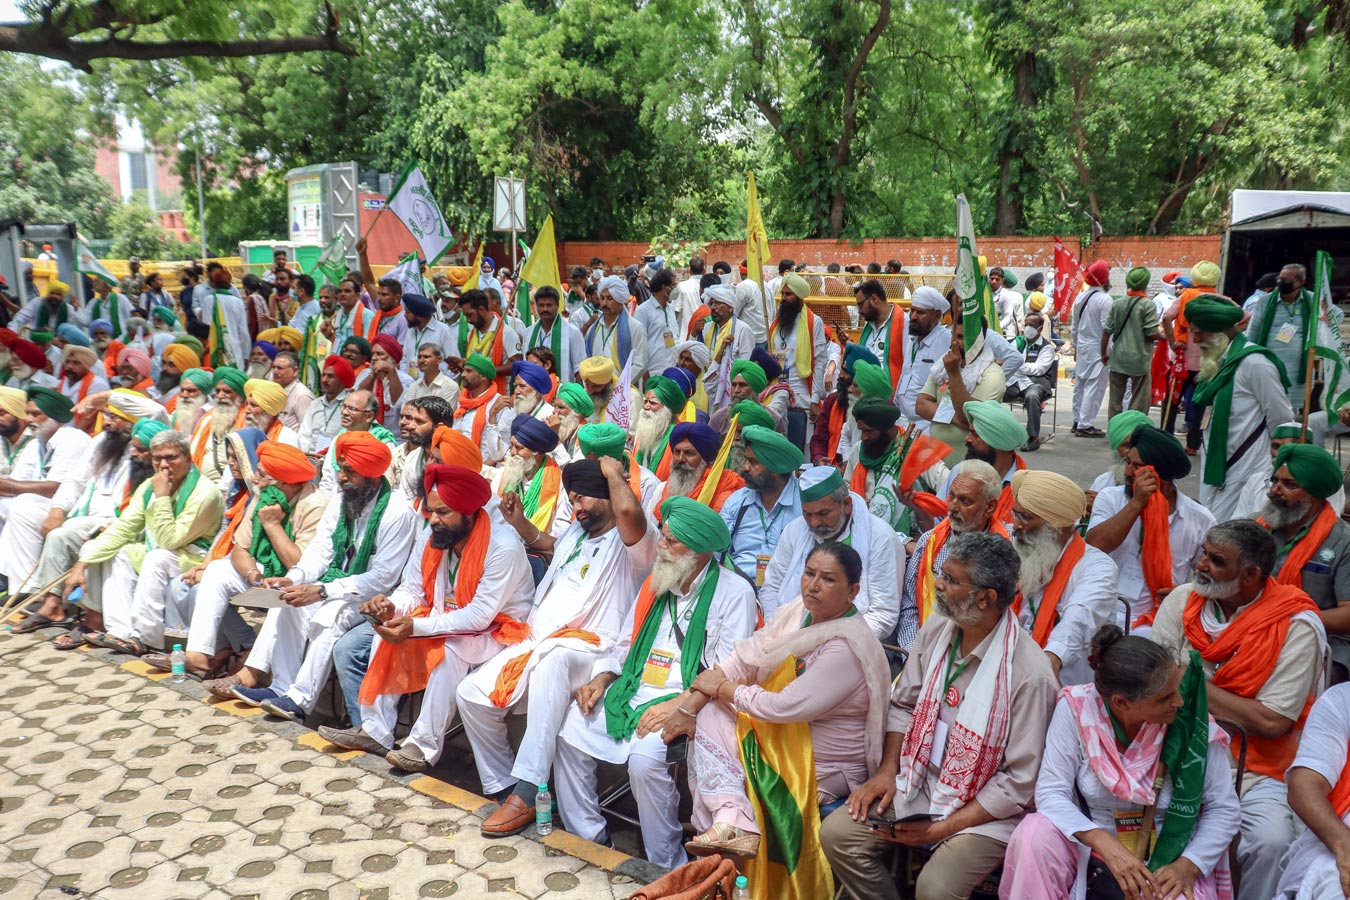 ‘Kisan Sansad’ at Jantar Mantar, aims to create farmers’ parliament